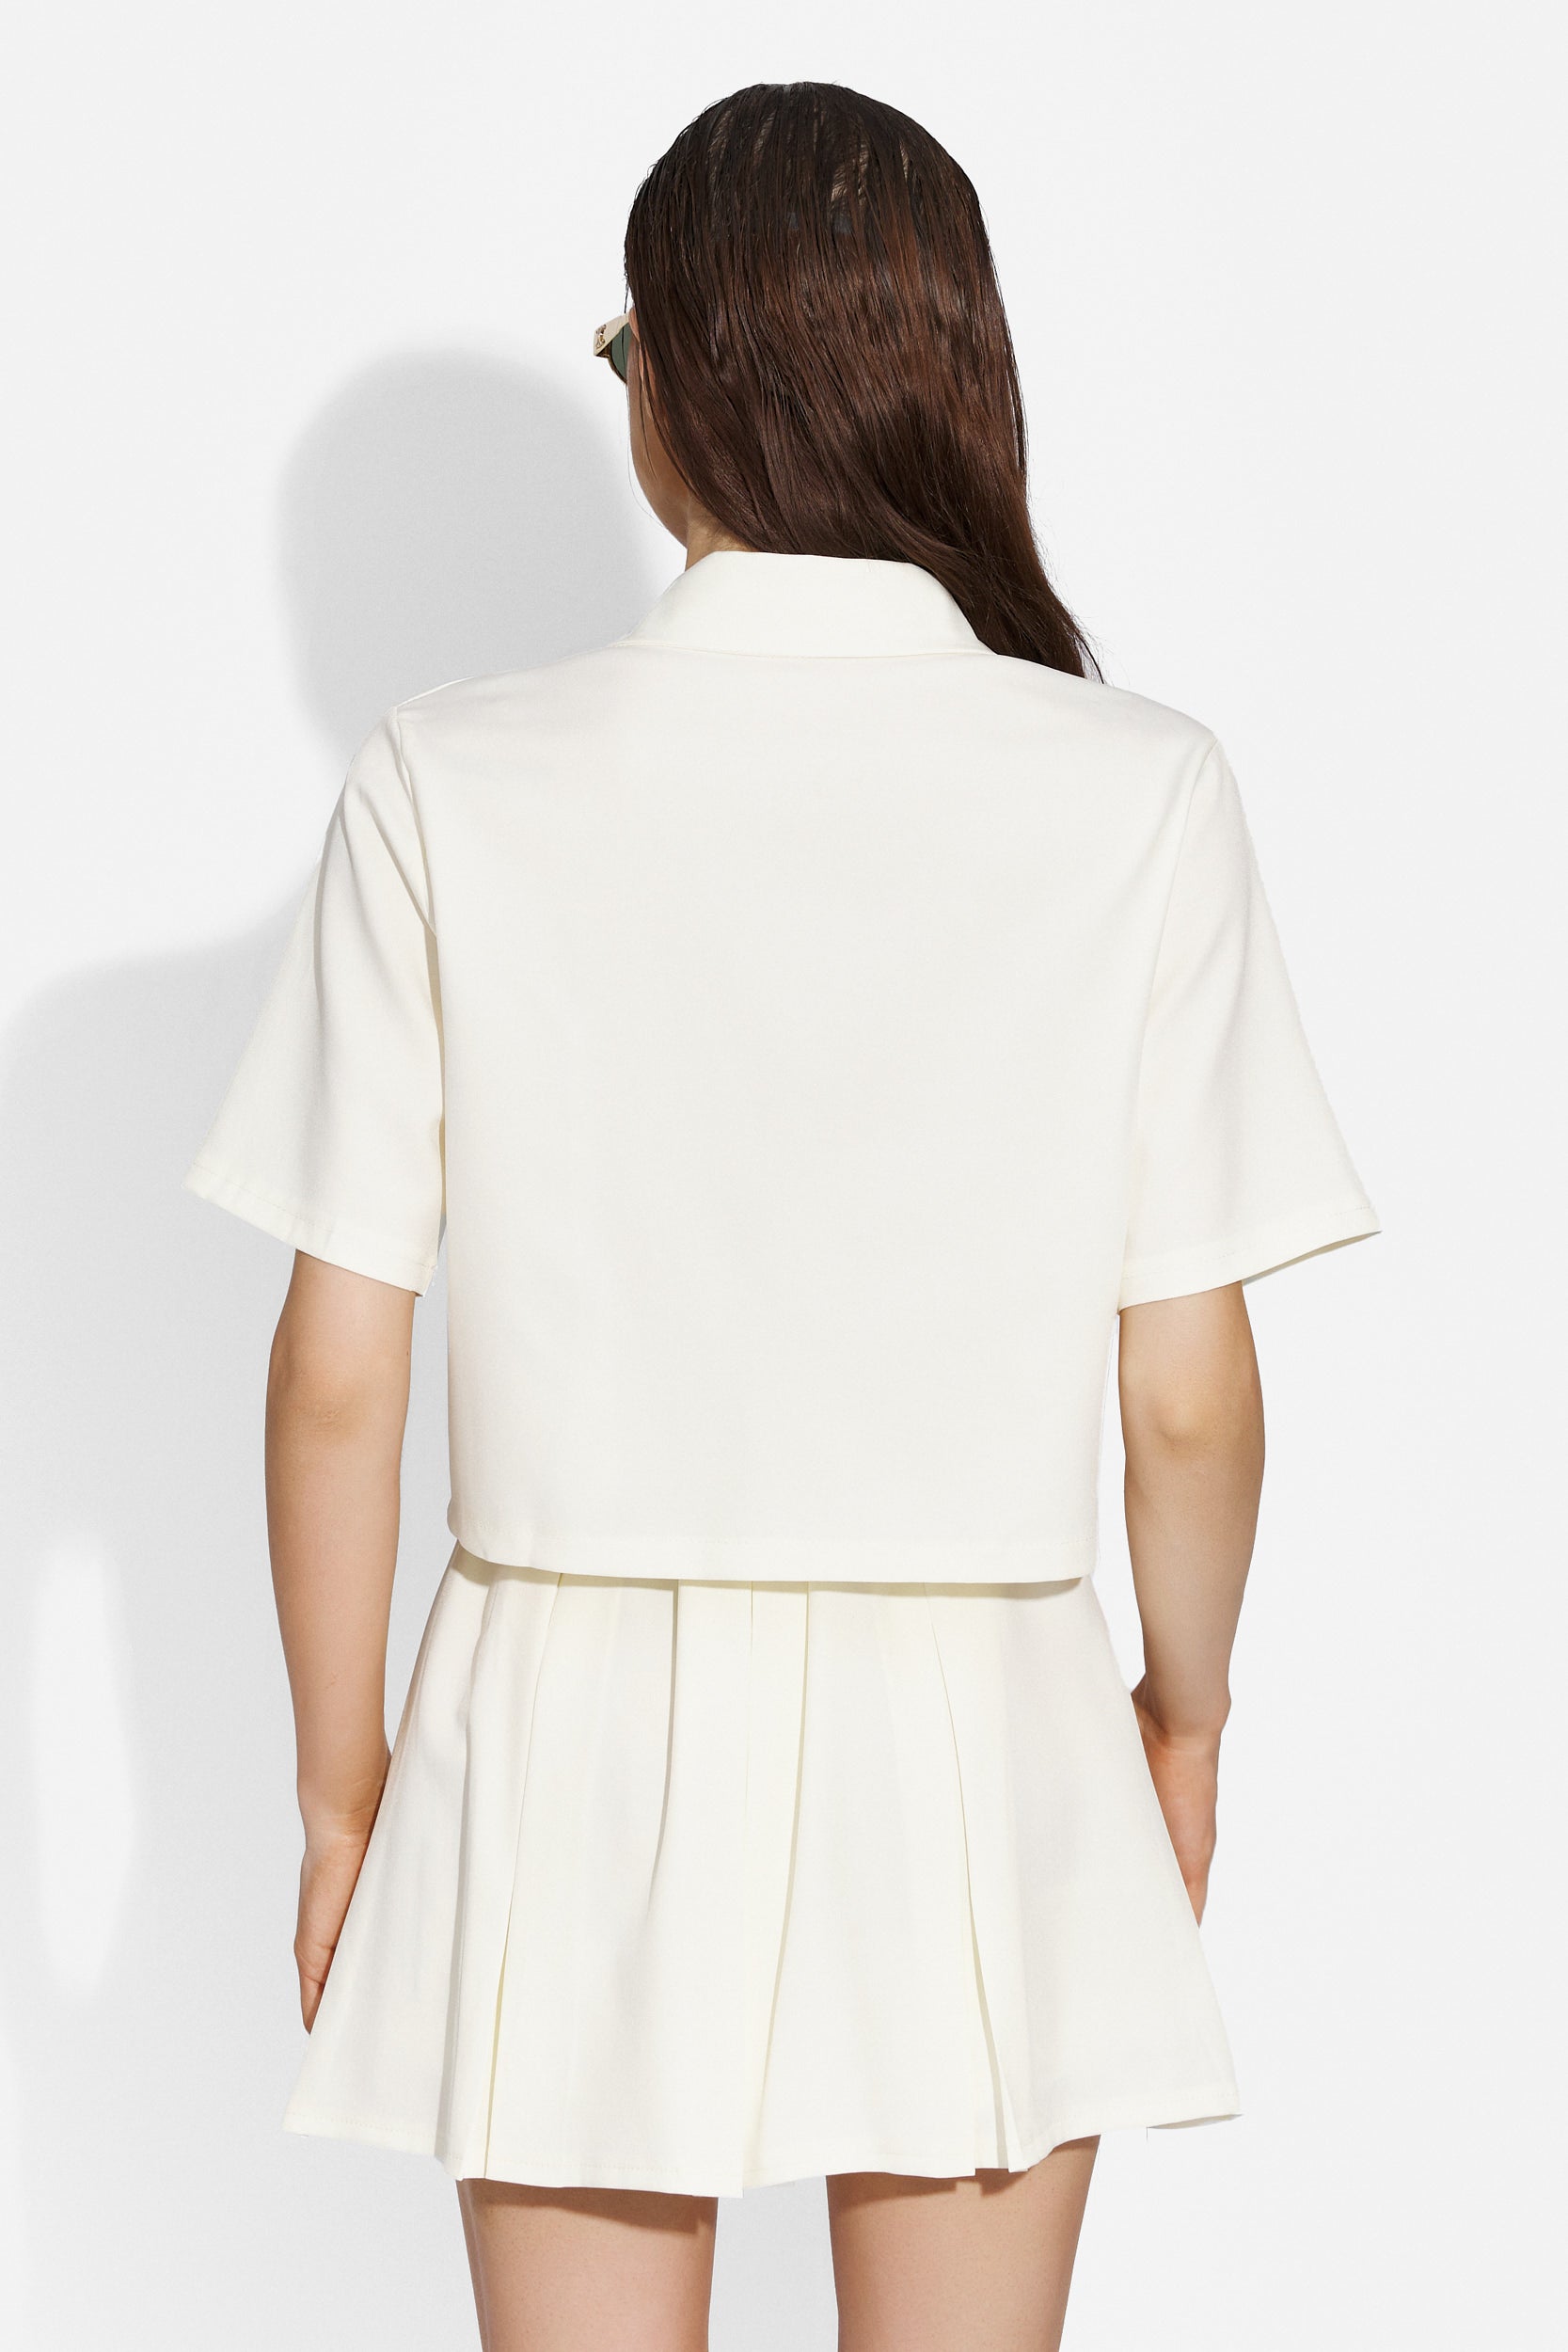 Elegant white skirt suit Fymata Bogas